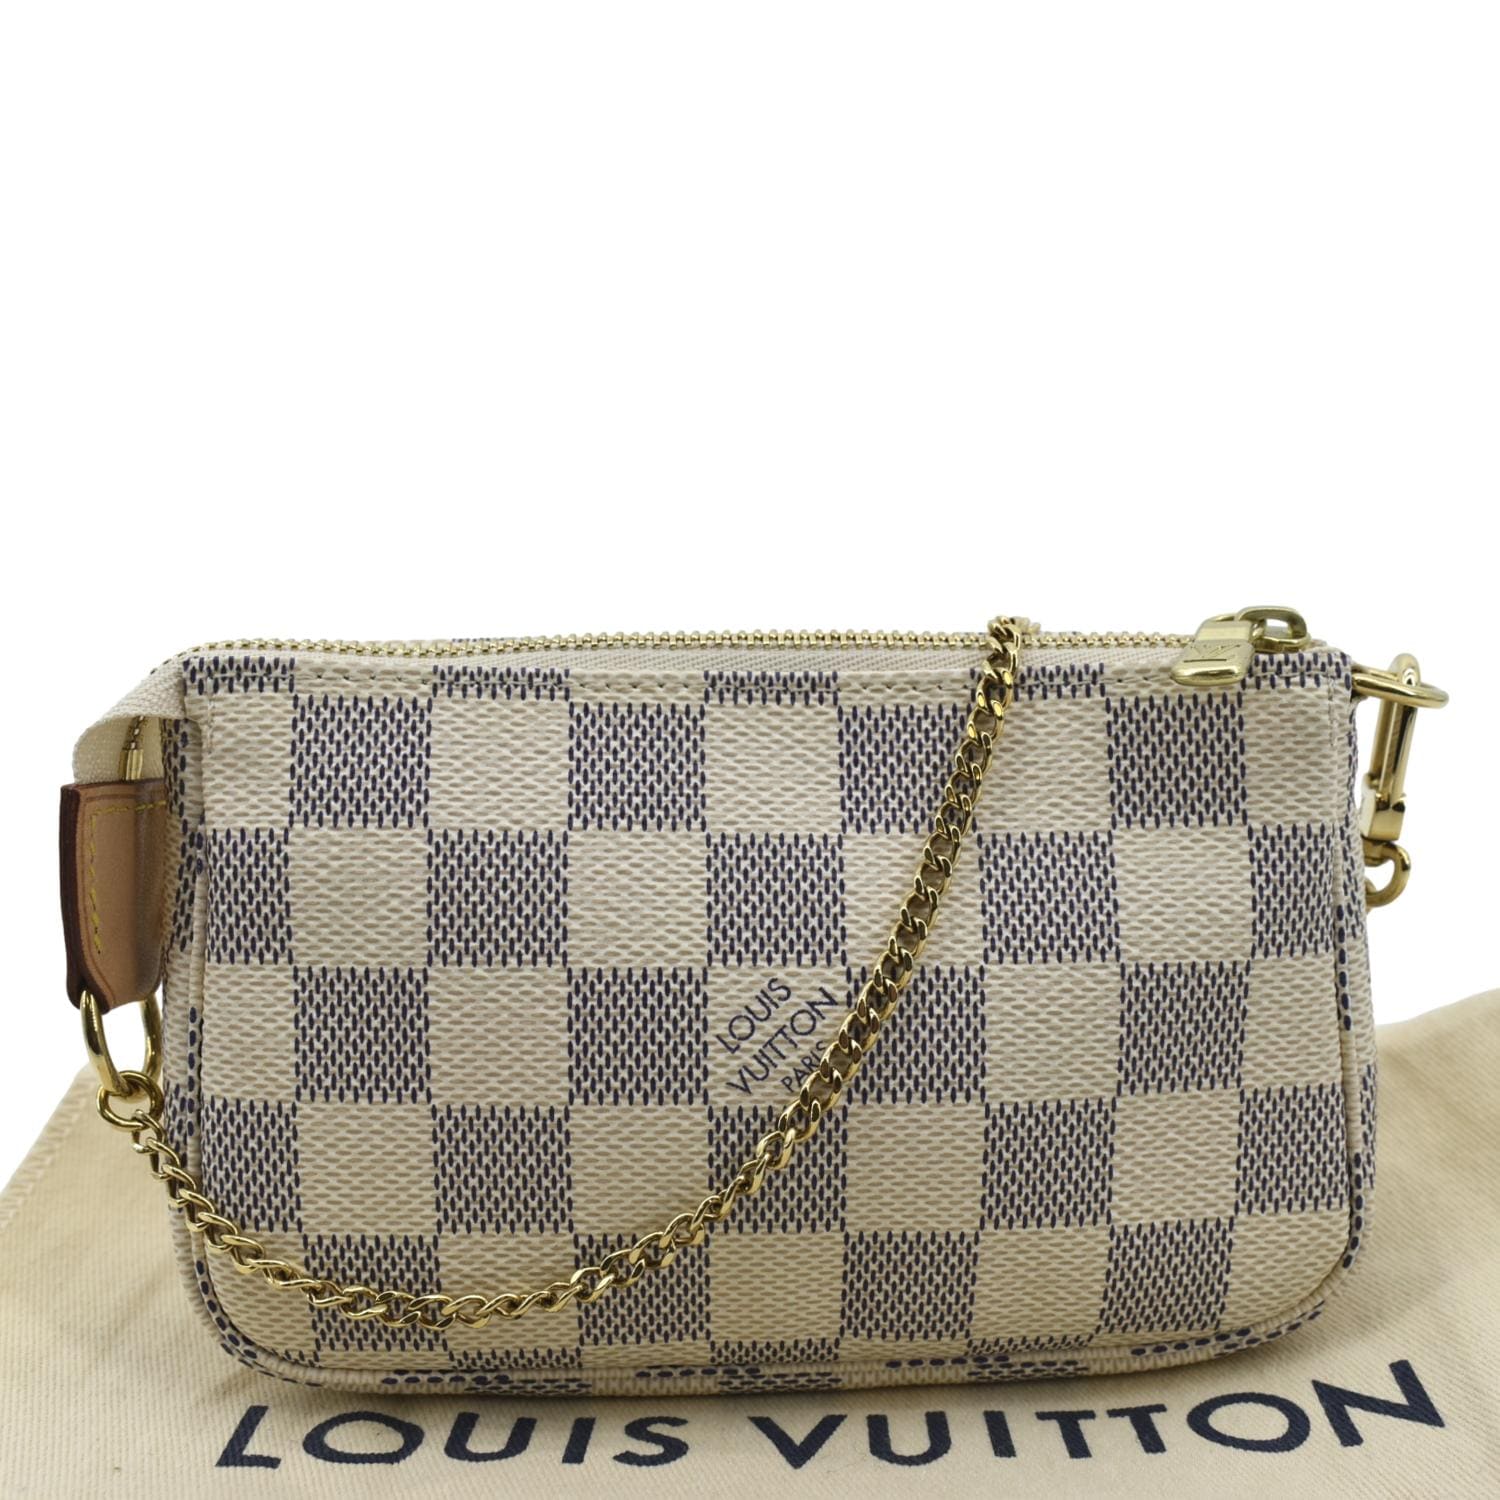 Louis Vuitton Pochette Damier Azur Mini White/Blue